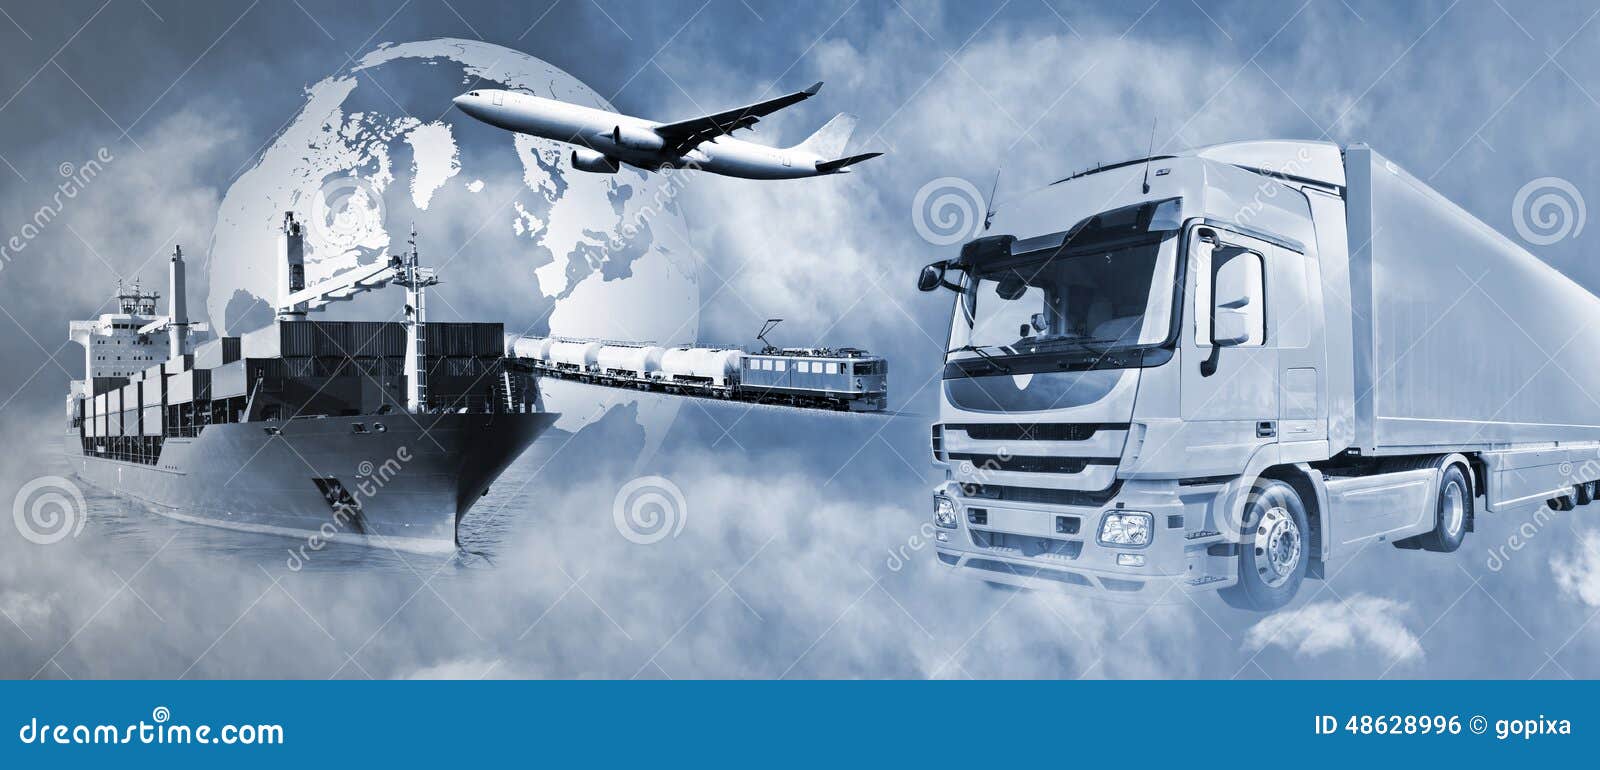 Transport logistics stock photo. Image of dynamics, agency